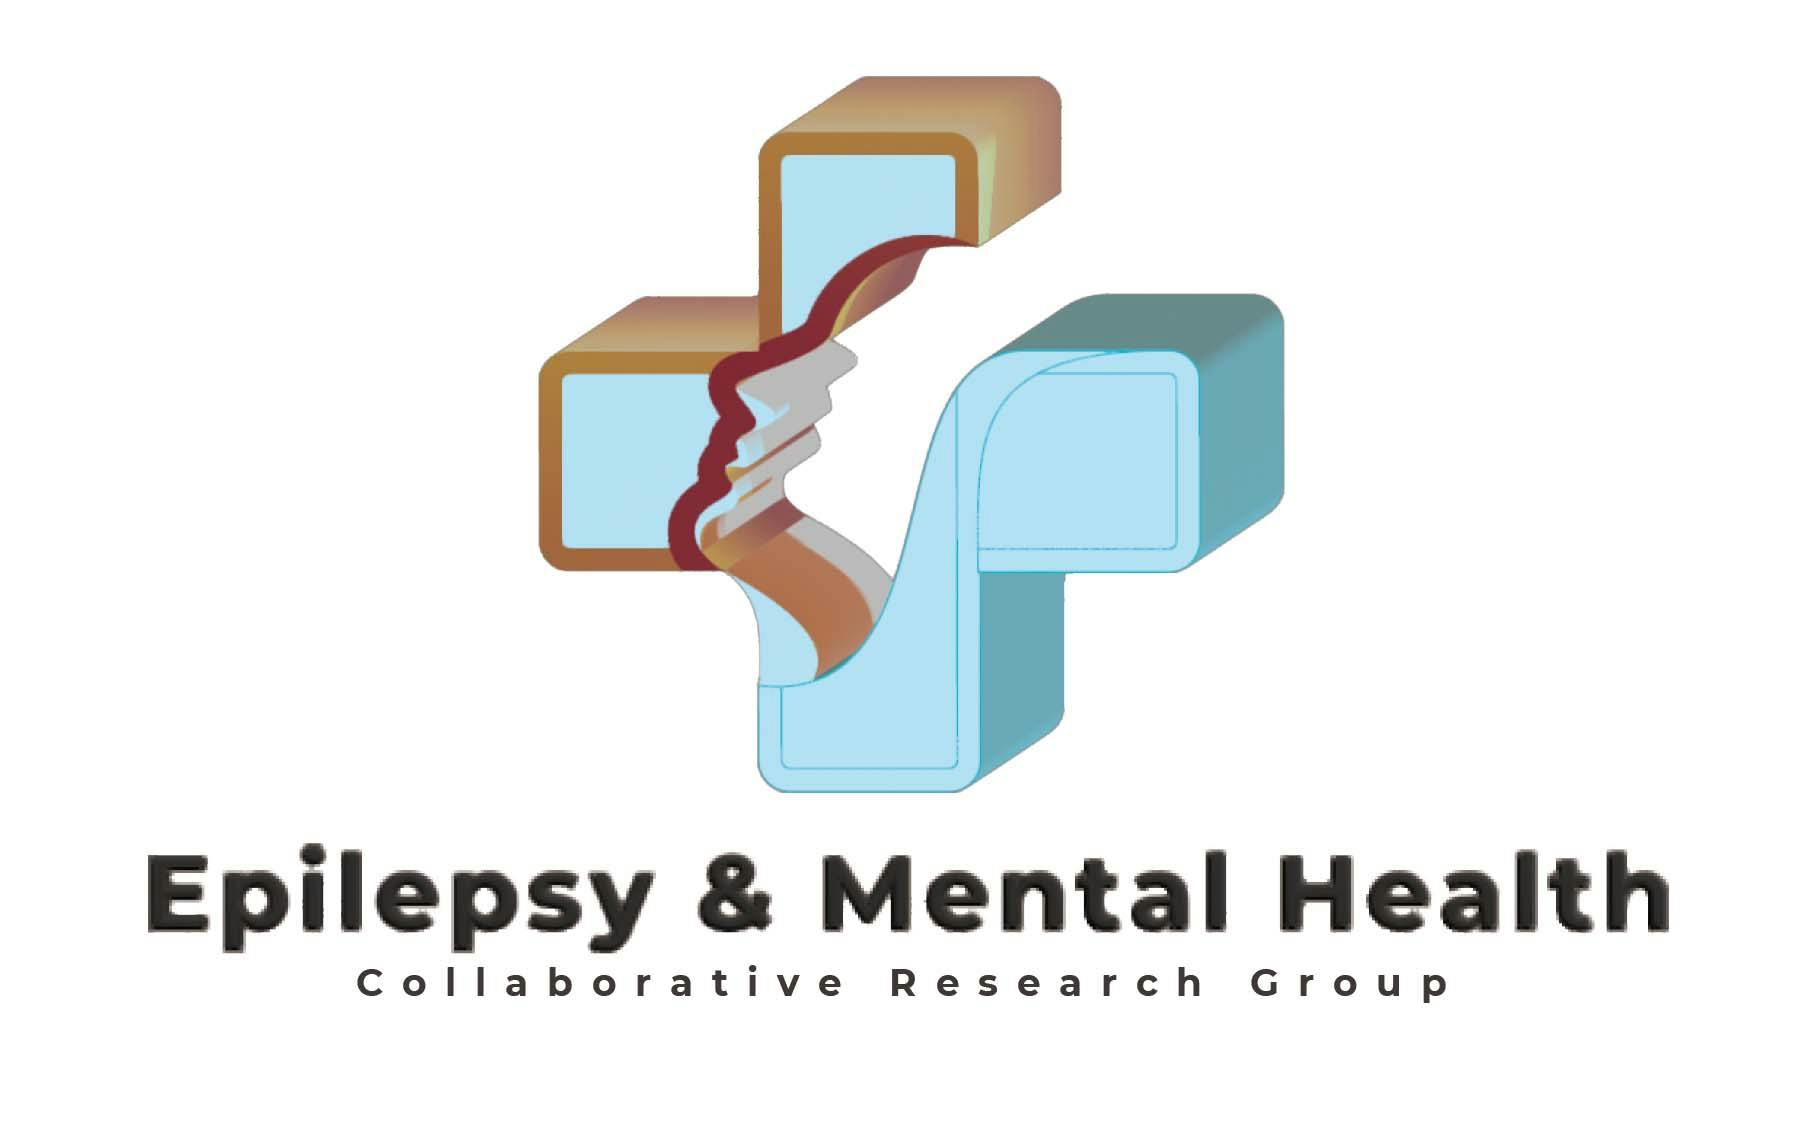 epilepsy research group - Main Logo.jpg